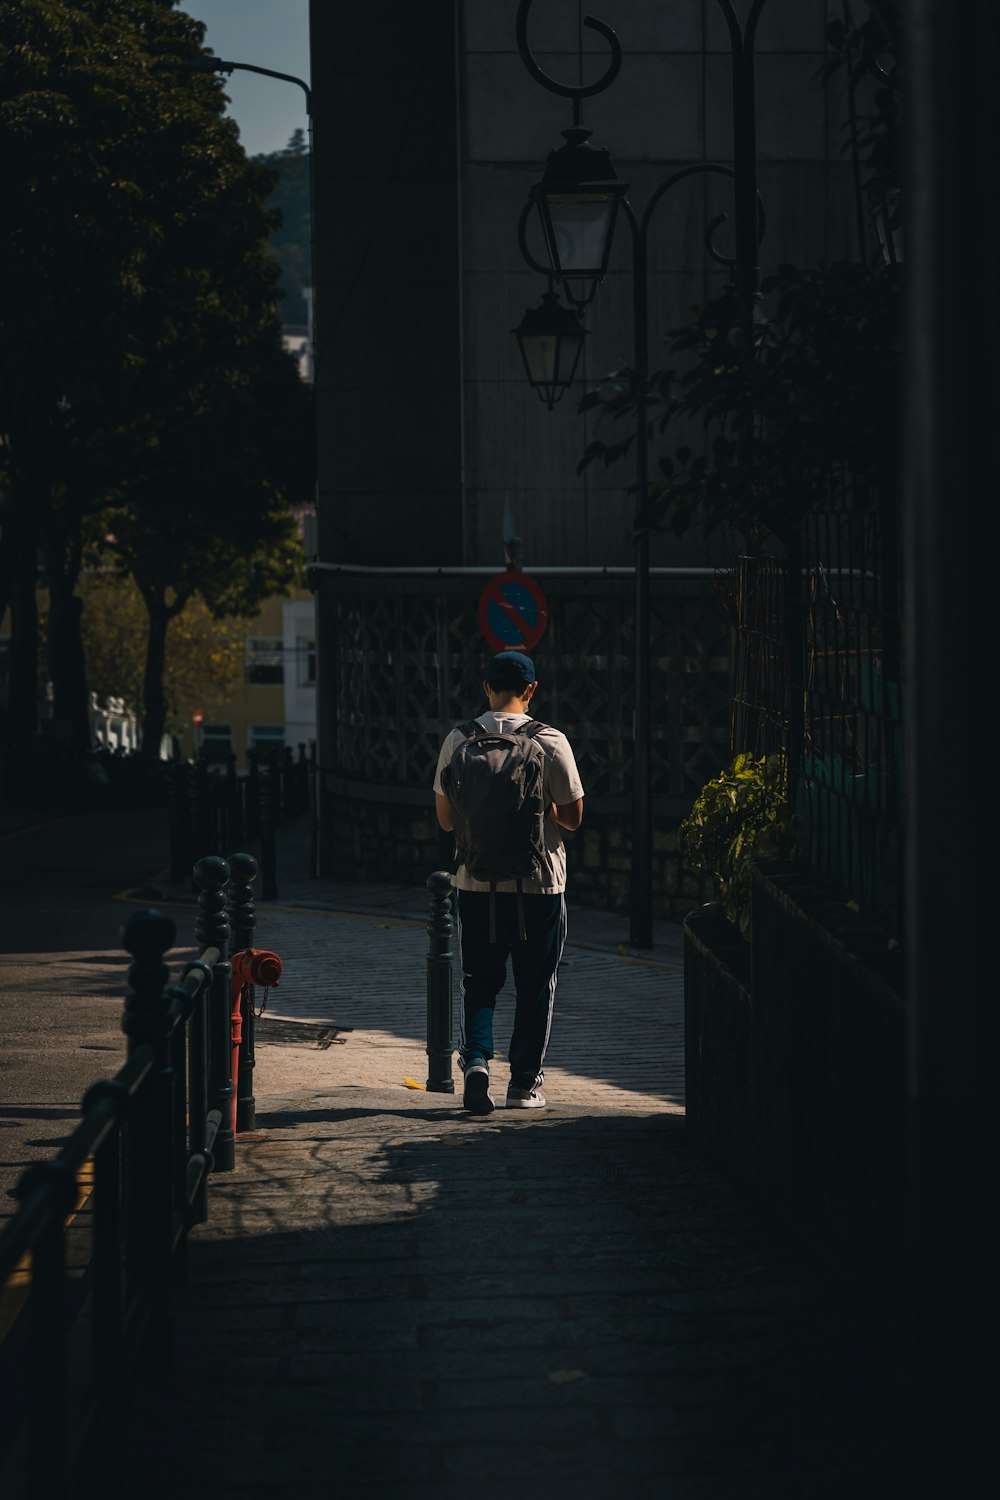 a man walking down a sidewalk with a backpack